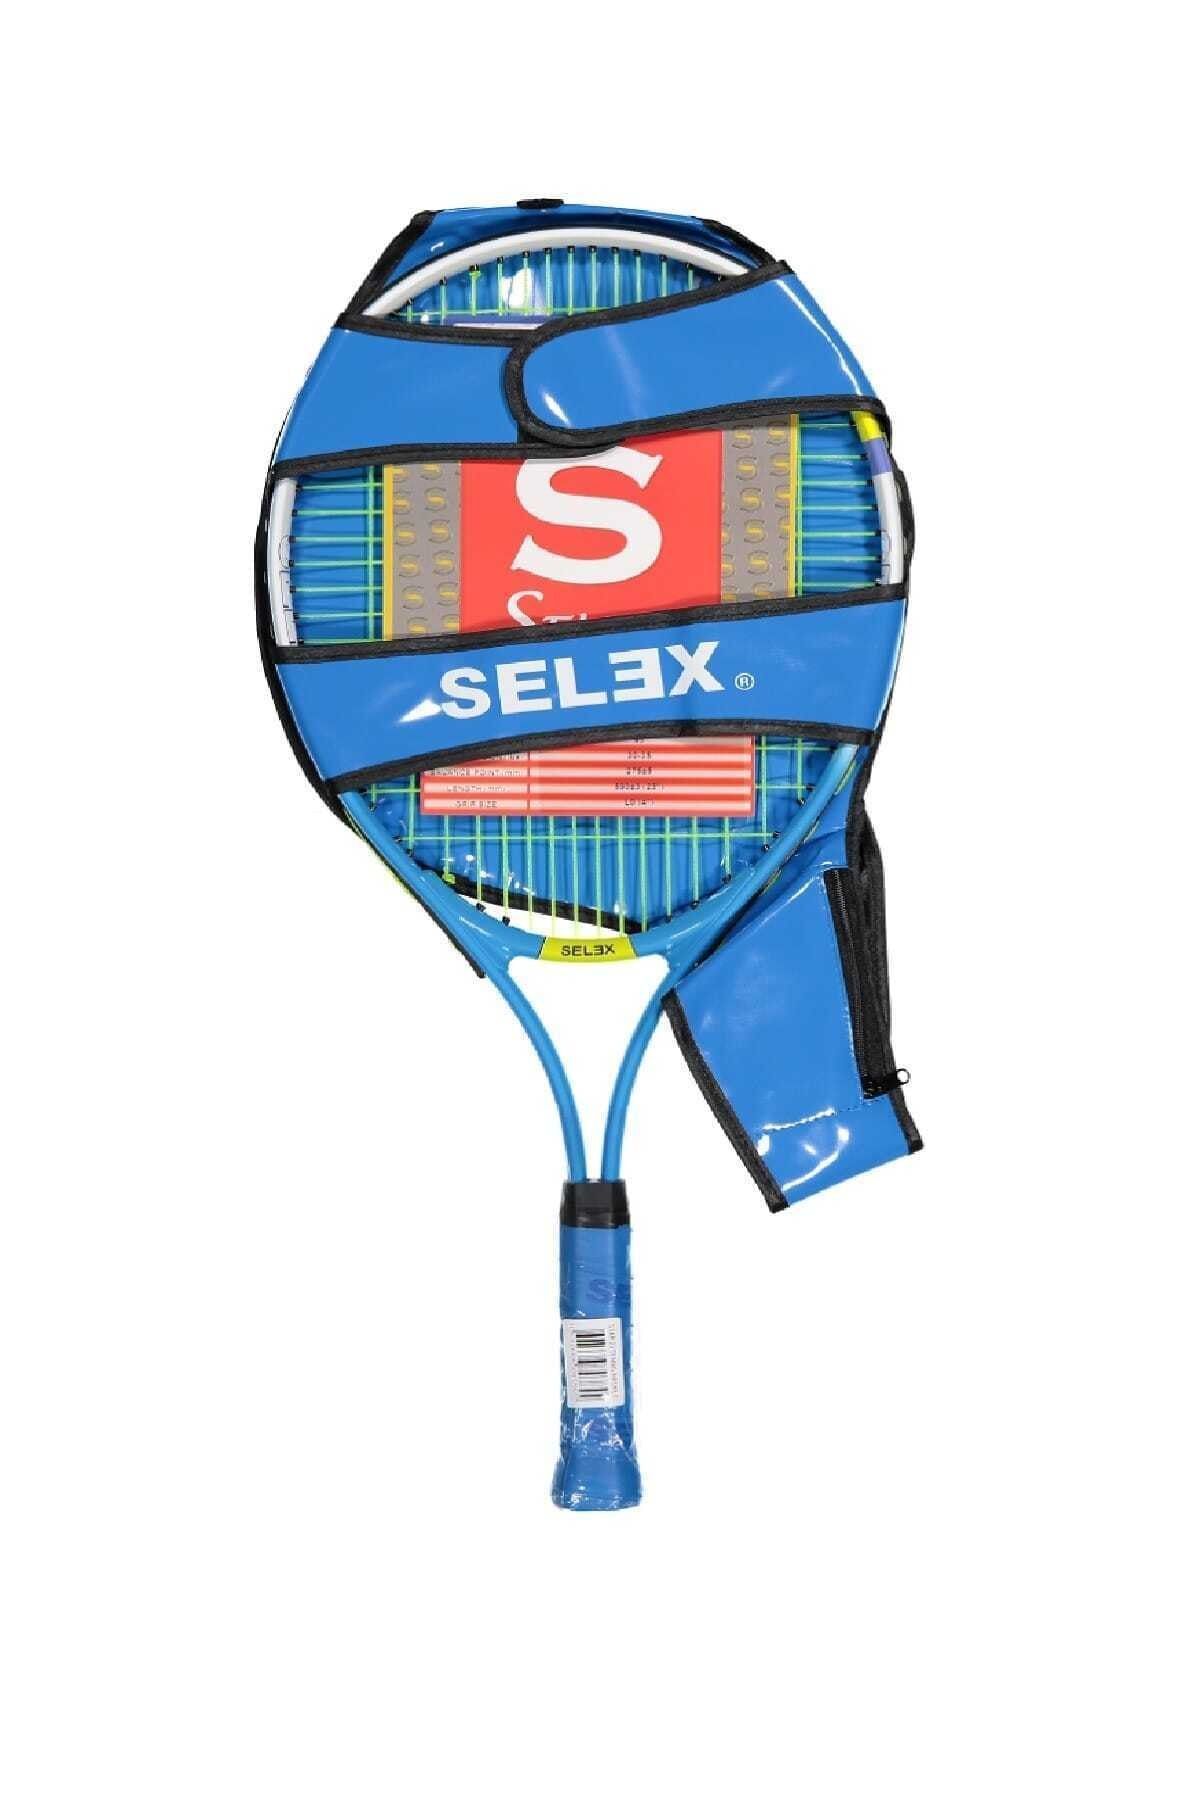 SELEX 23 Star Tenis Raketi